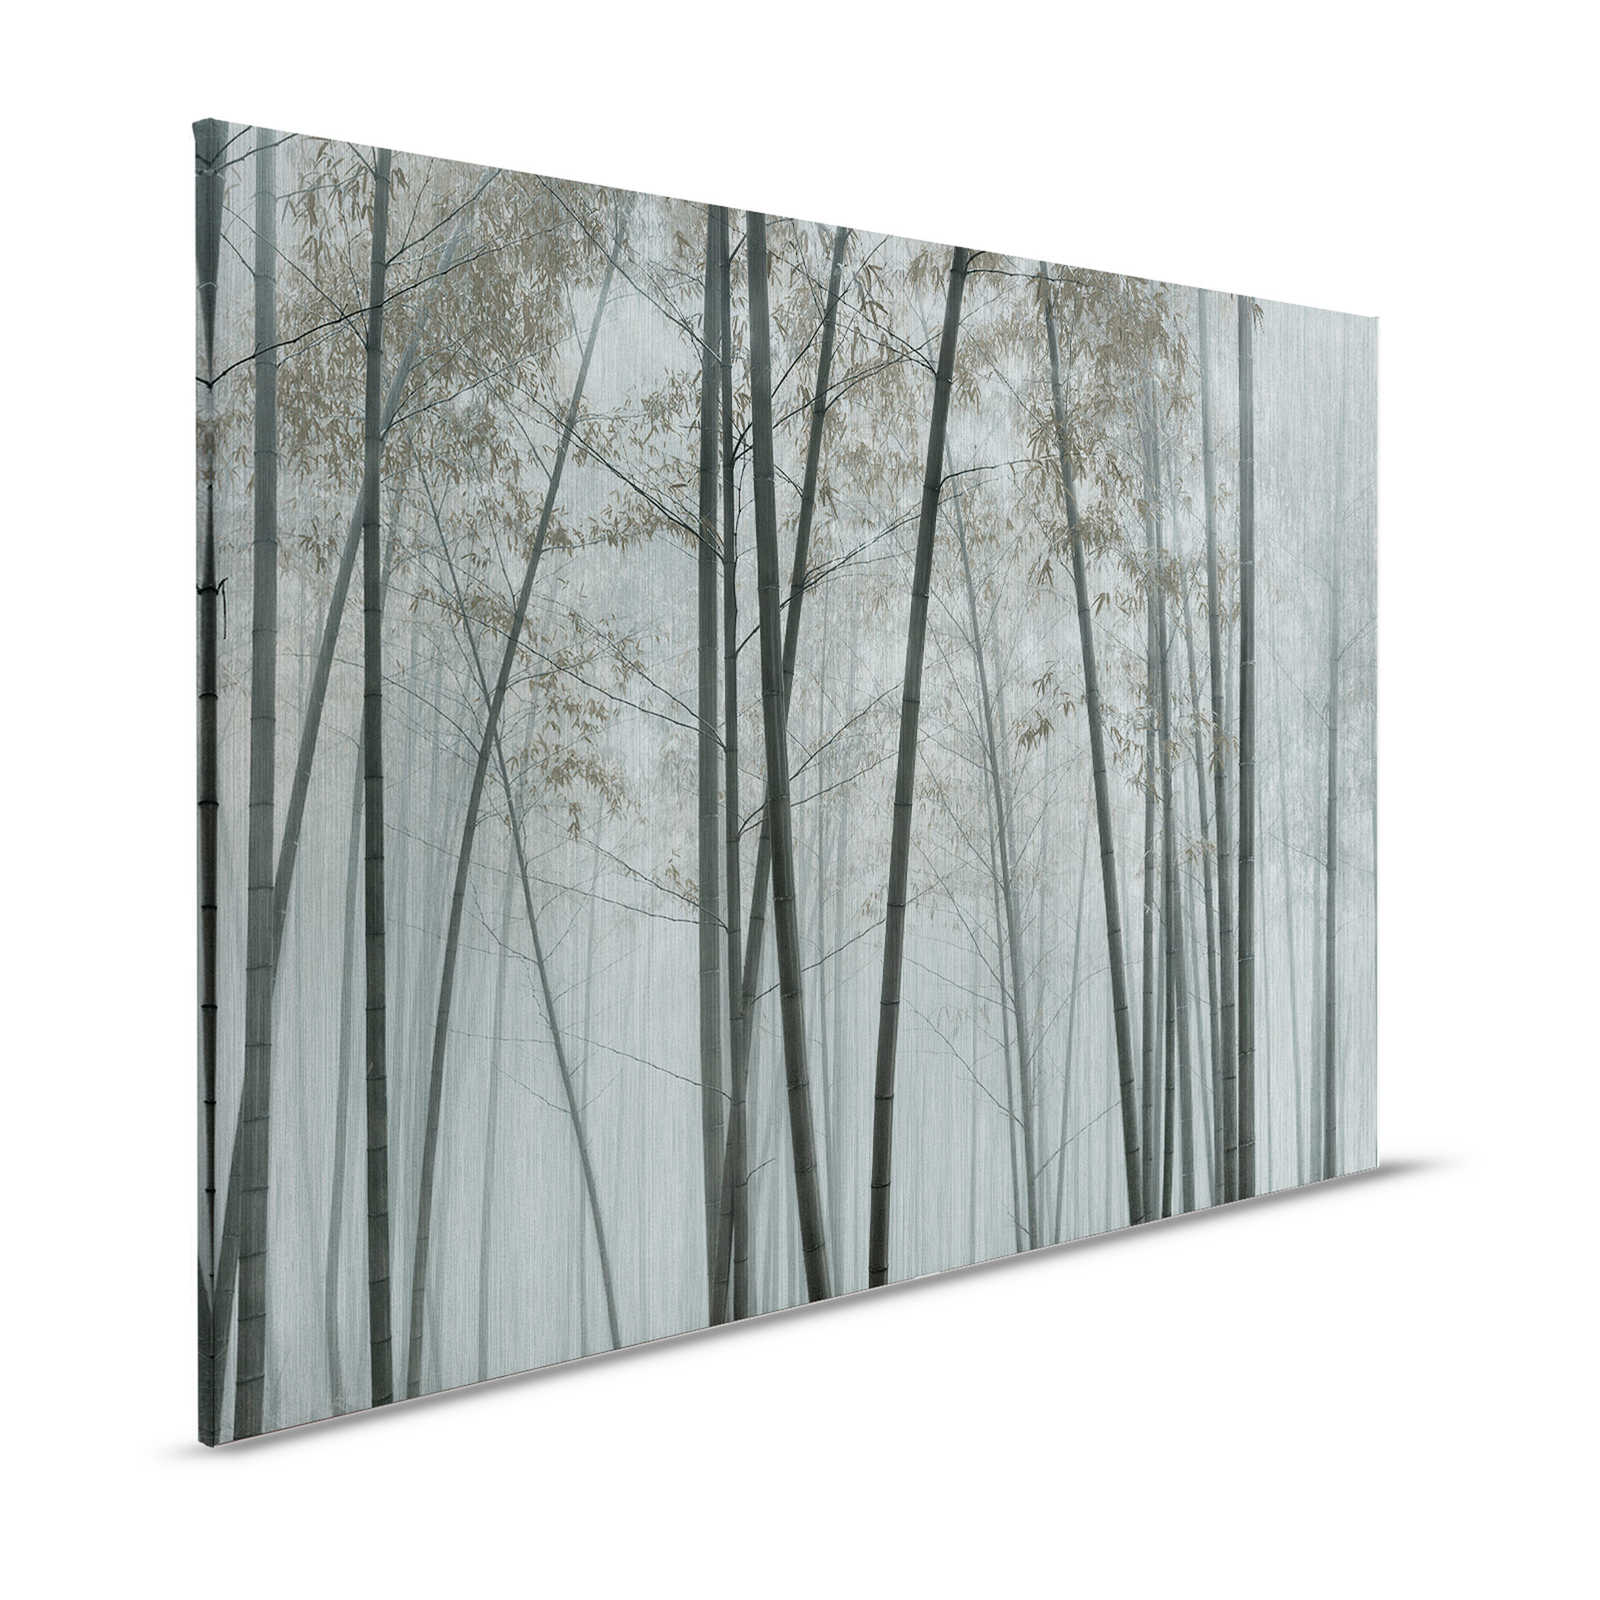 In de Bamboe 1 - Bamboe Canvas schilderij Bamboebos in de mist - 1.20 m x 0.80 m
